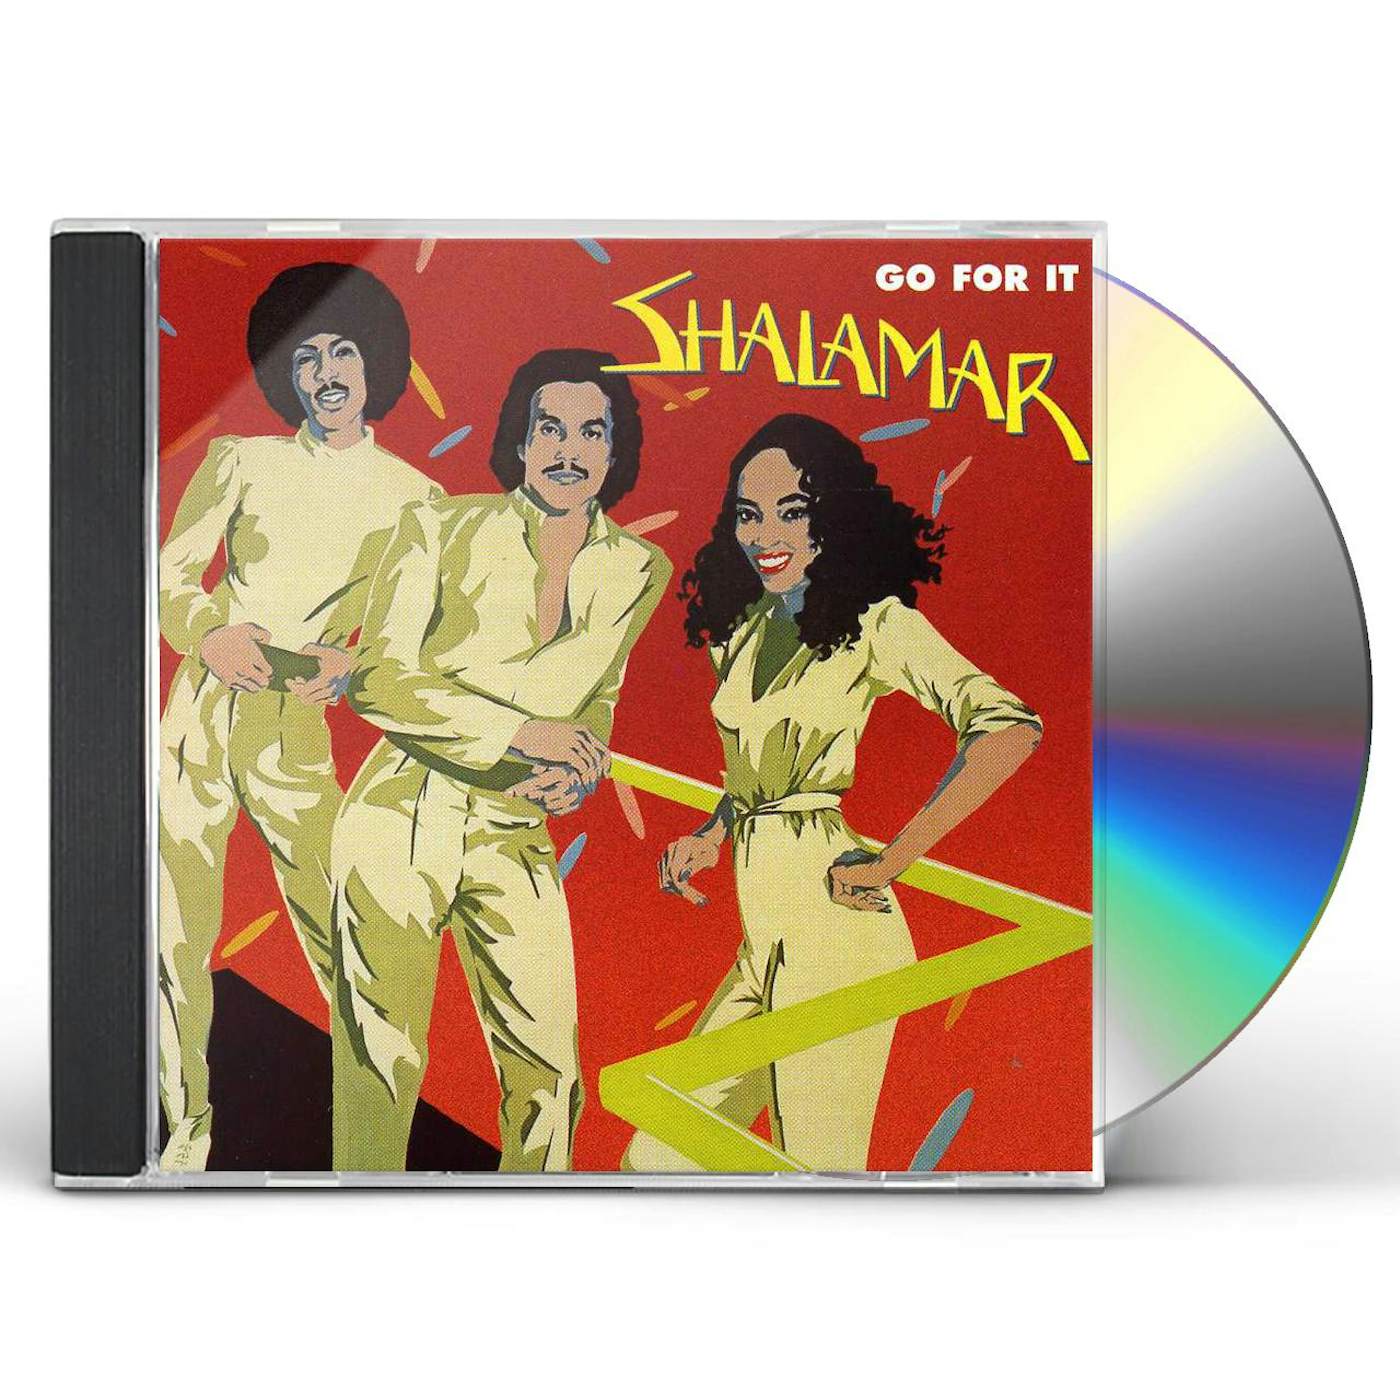 Shalamar GO FOR IT CD